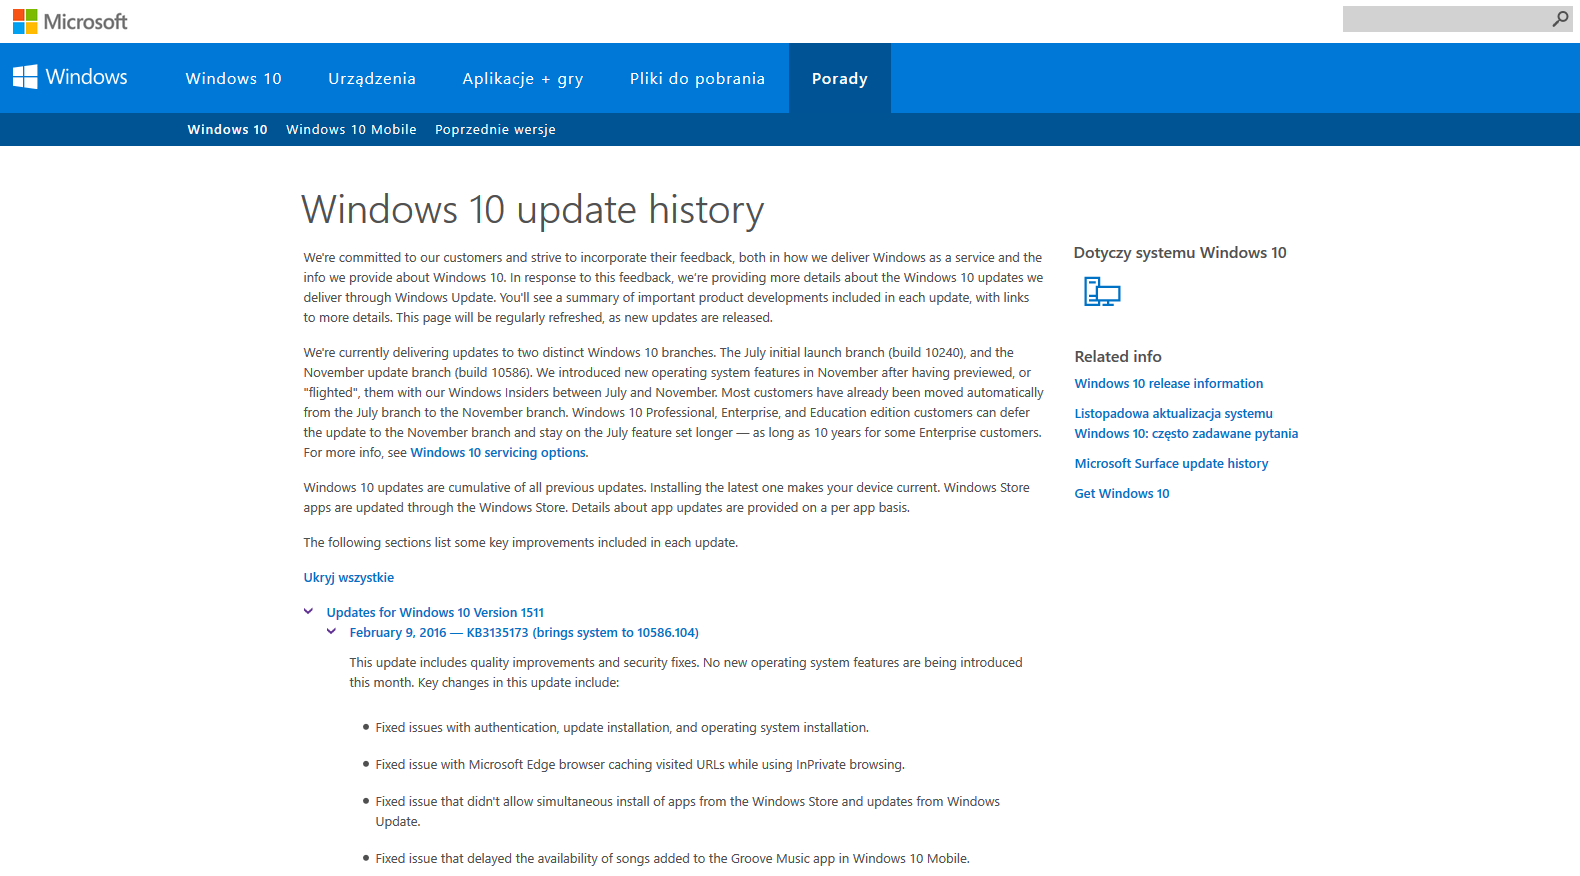  Windows 10 update history